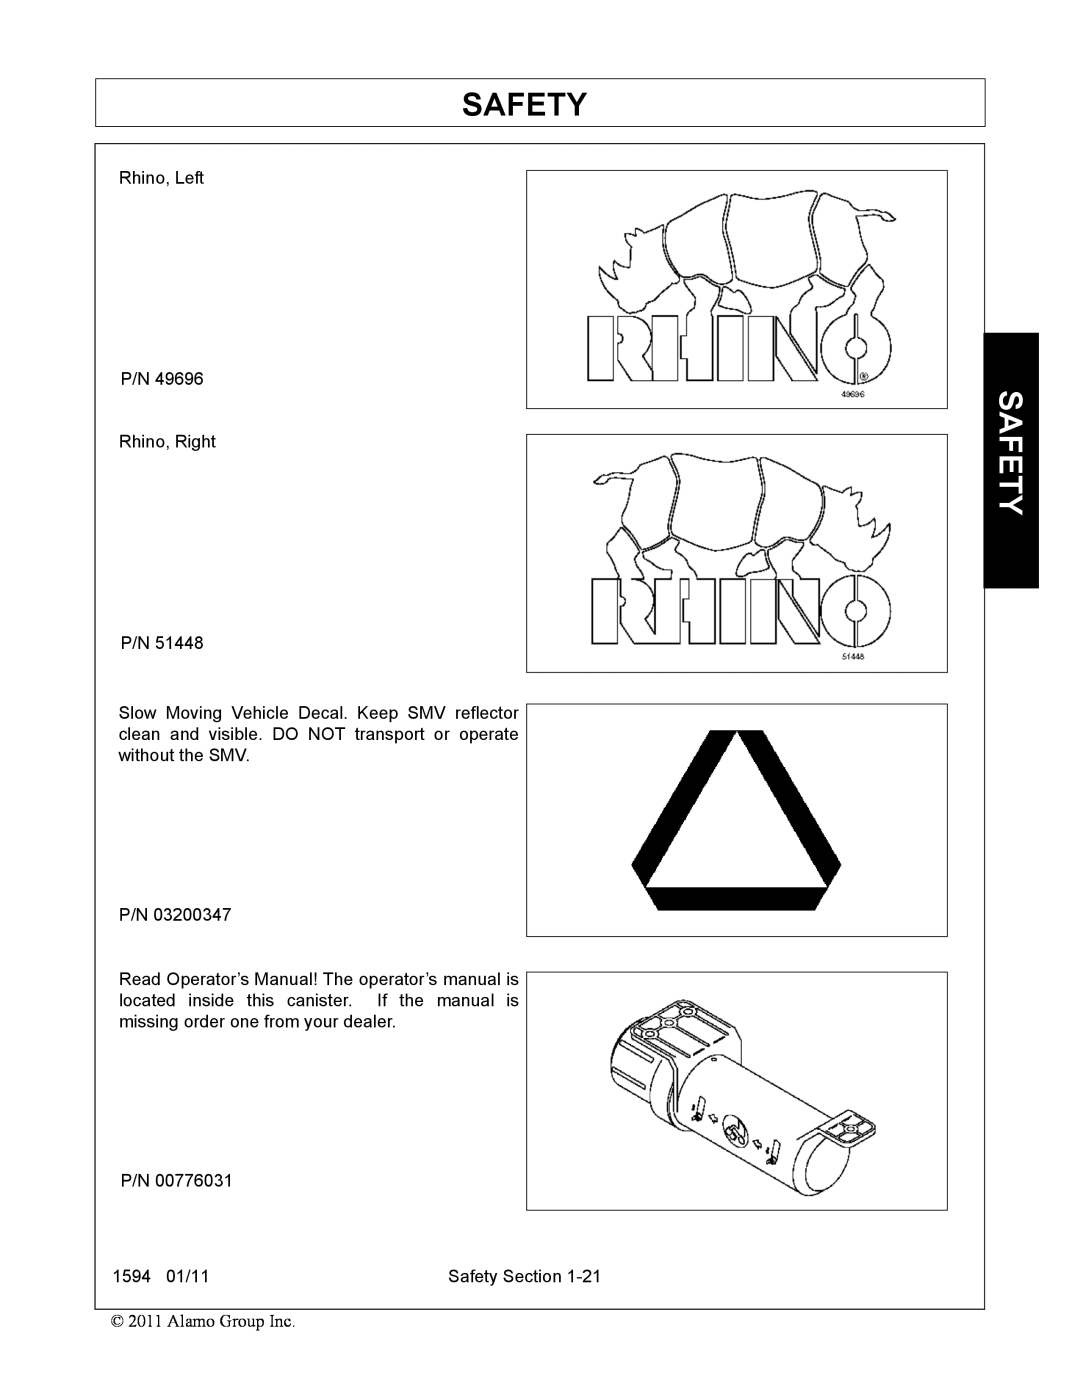 Rhino Mounts 1594 manual Safety 